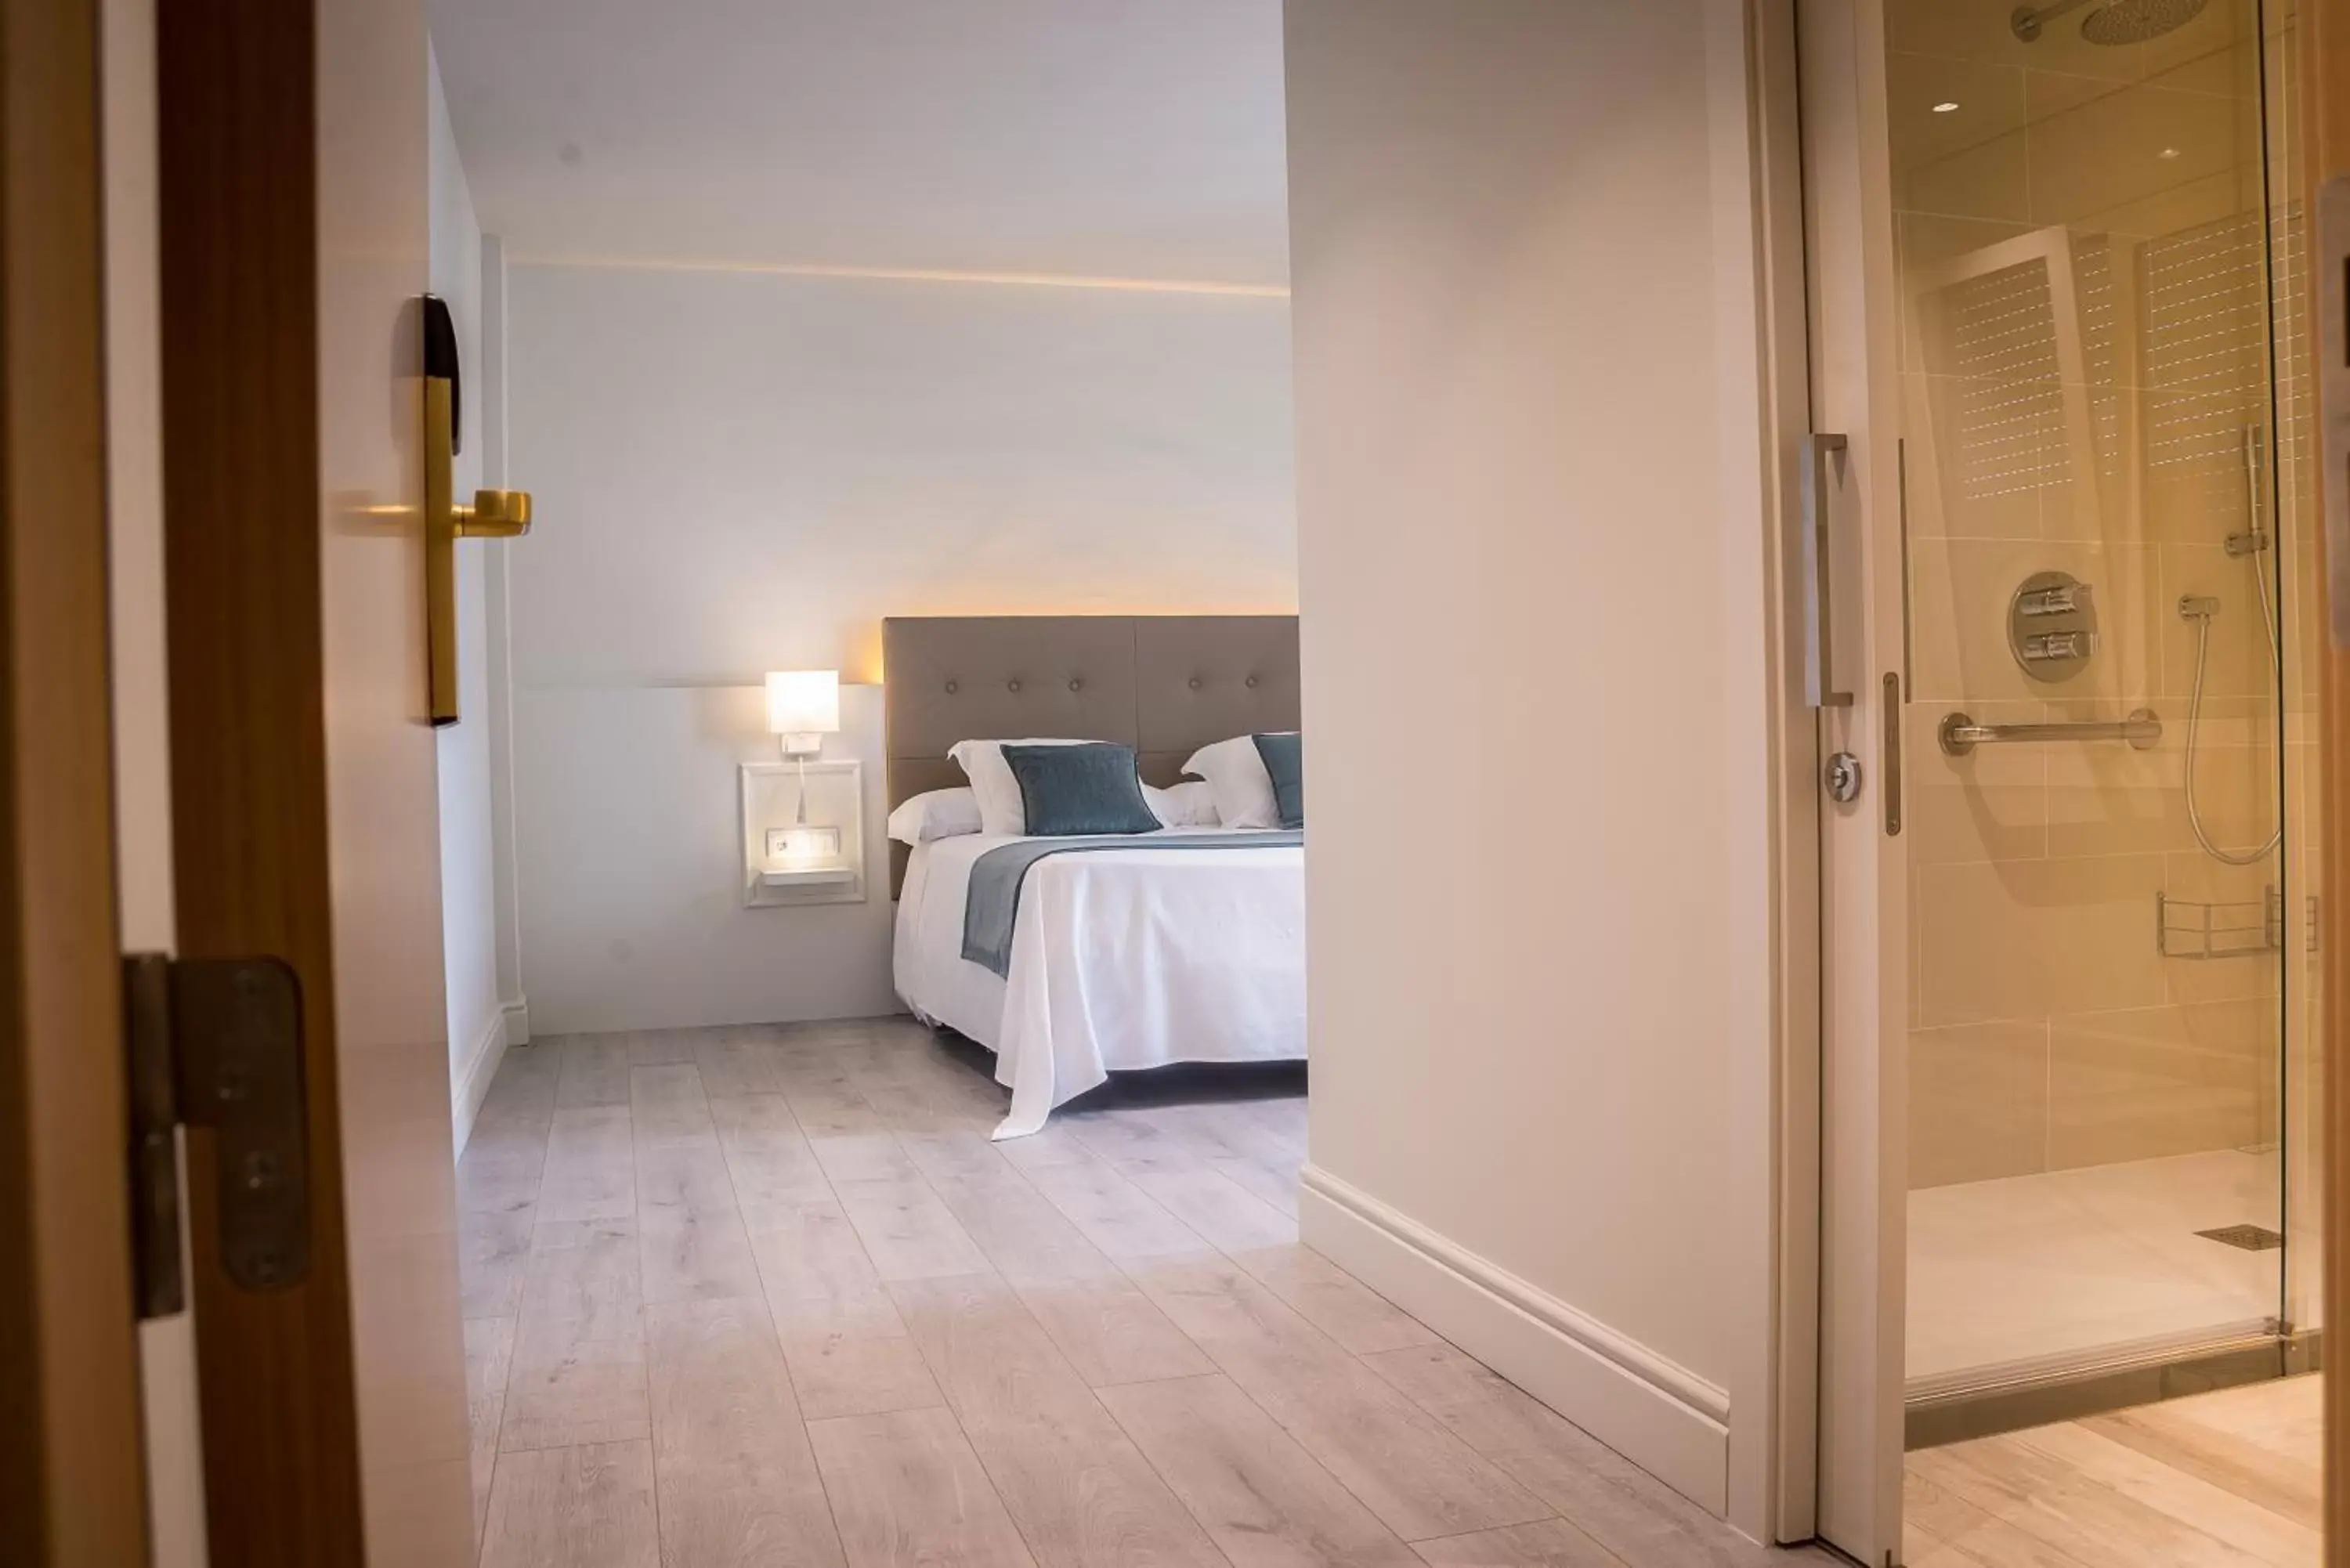 Shower, Room Photo in Hotel Pirineos